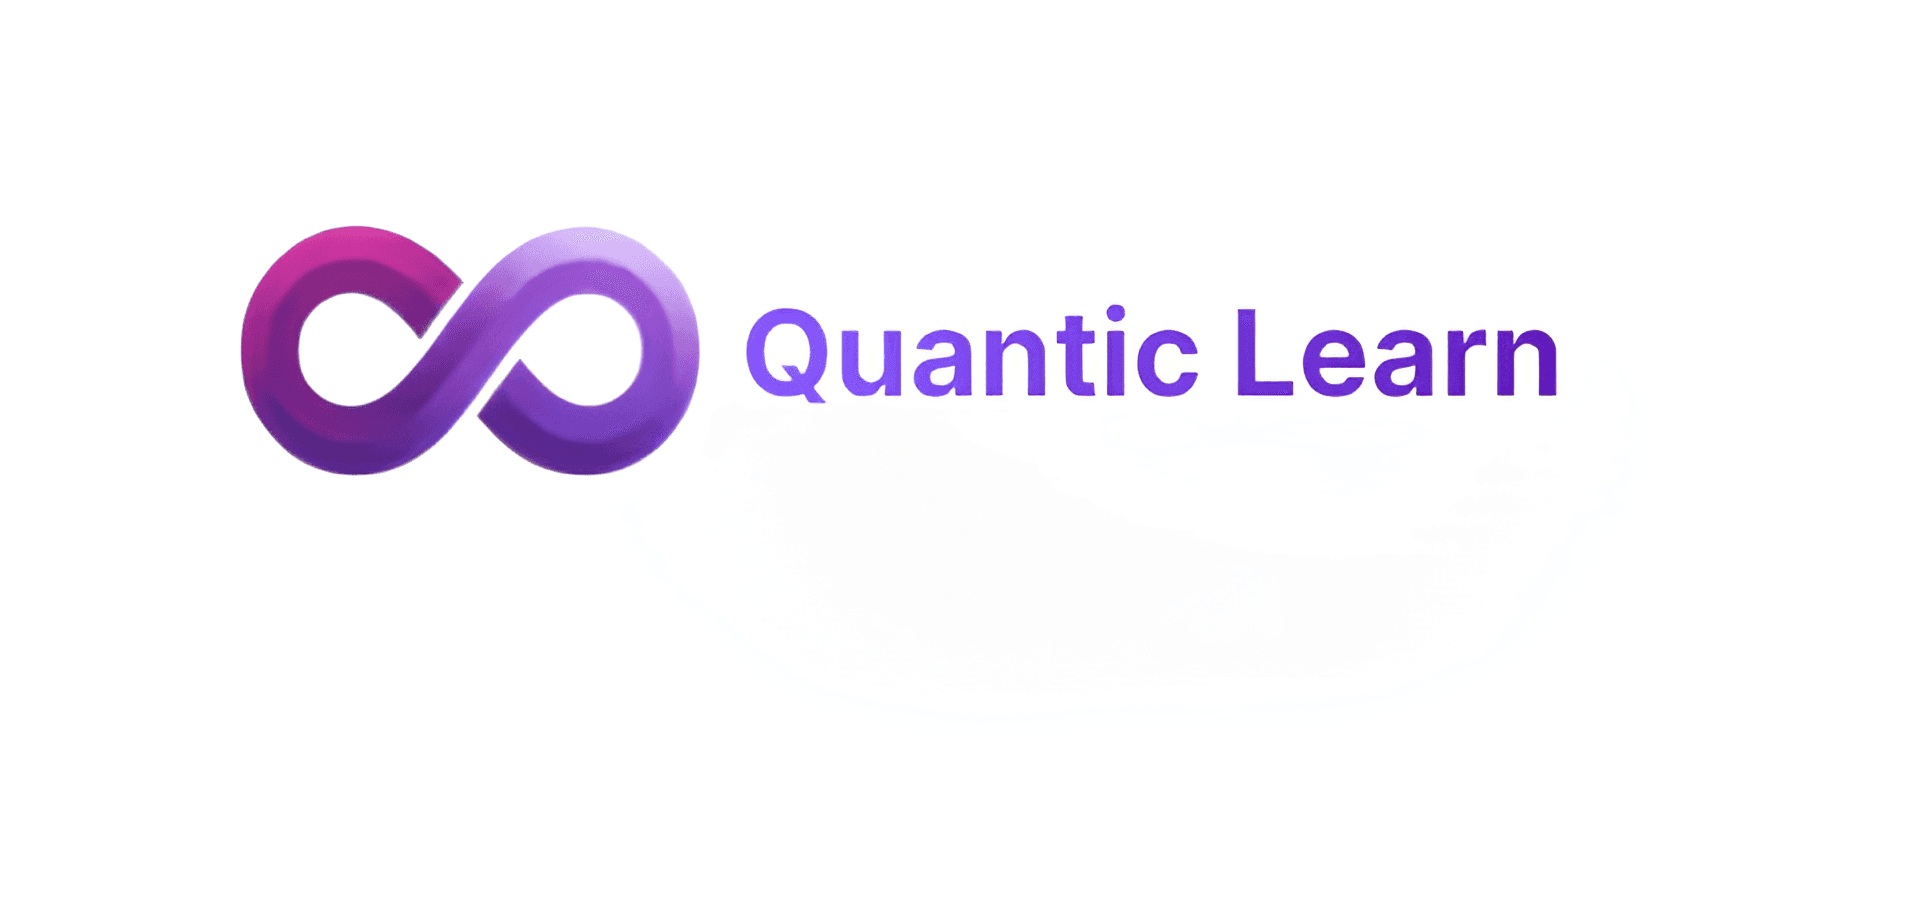 Quantic Learn - Plataforma de aprendizado livre